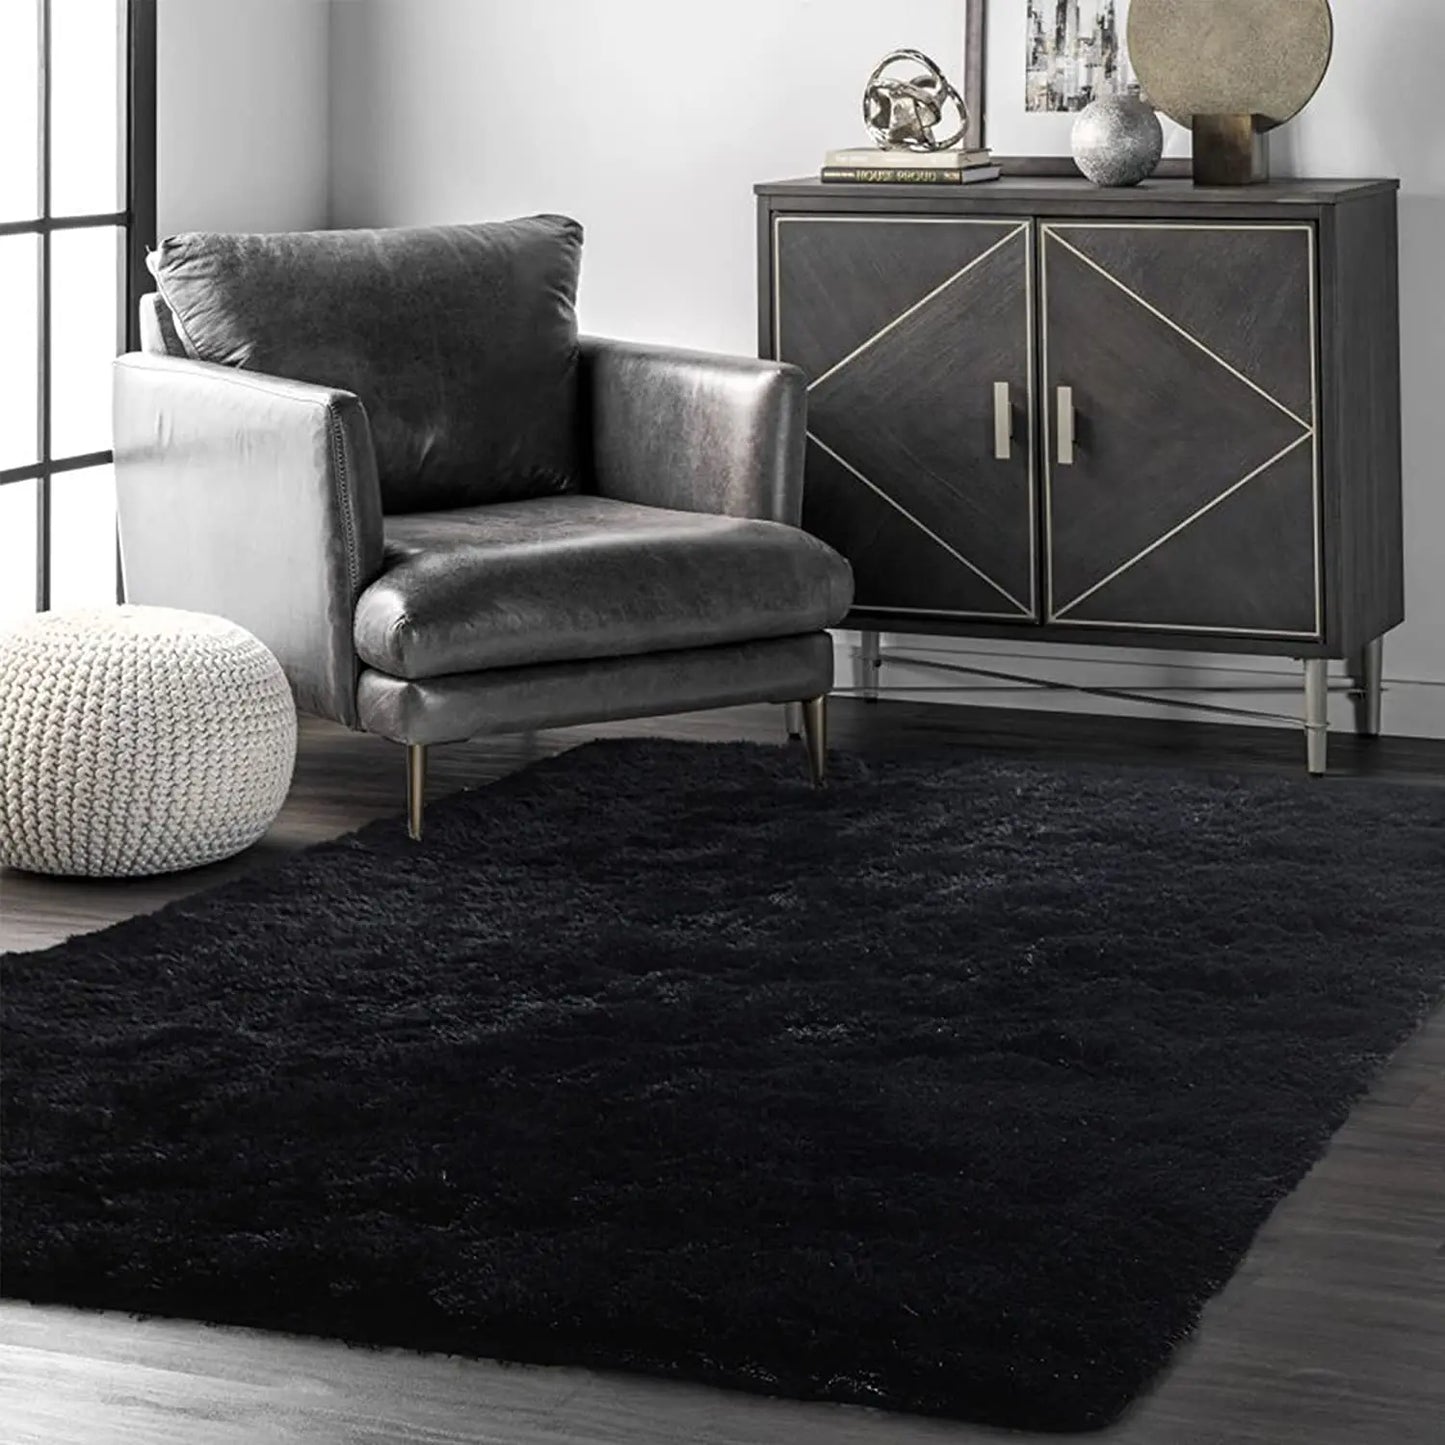 Black Area Rugs for Bedroom Plush Furry Shag Rug Indoor Modern Plush Area Rugs for Living Room Home Decor Floor Carpet Shag Rugs